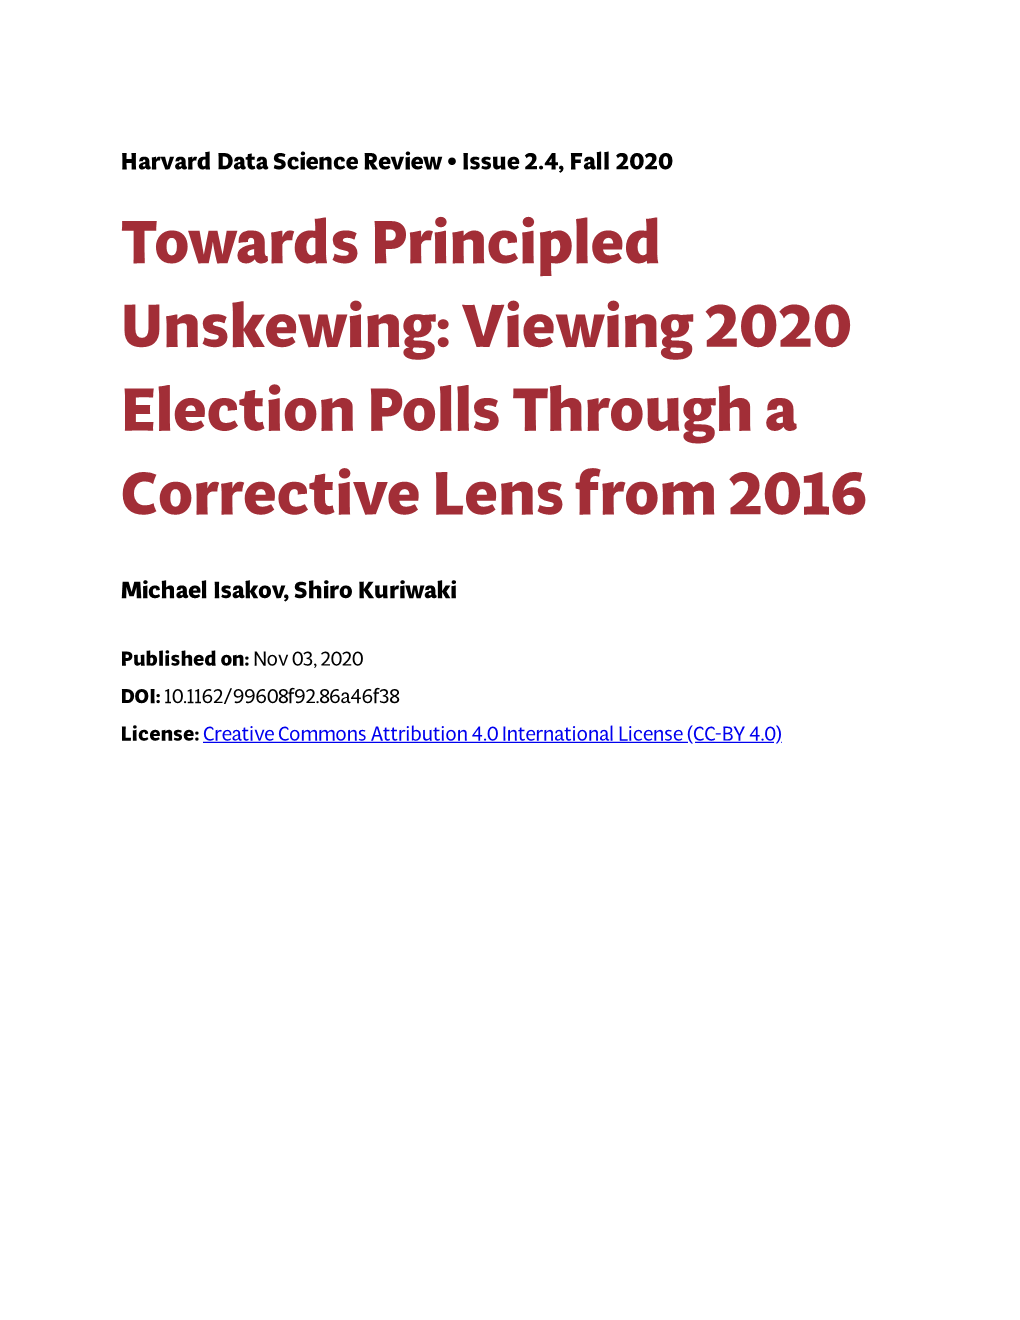 Viewing 2020 Election Polls Through a Corrective Lens from 2016